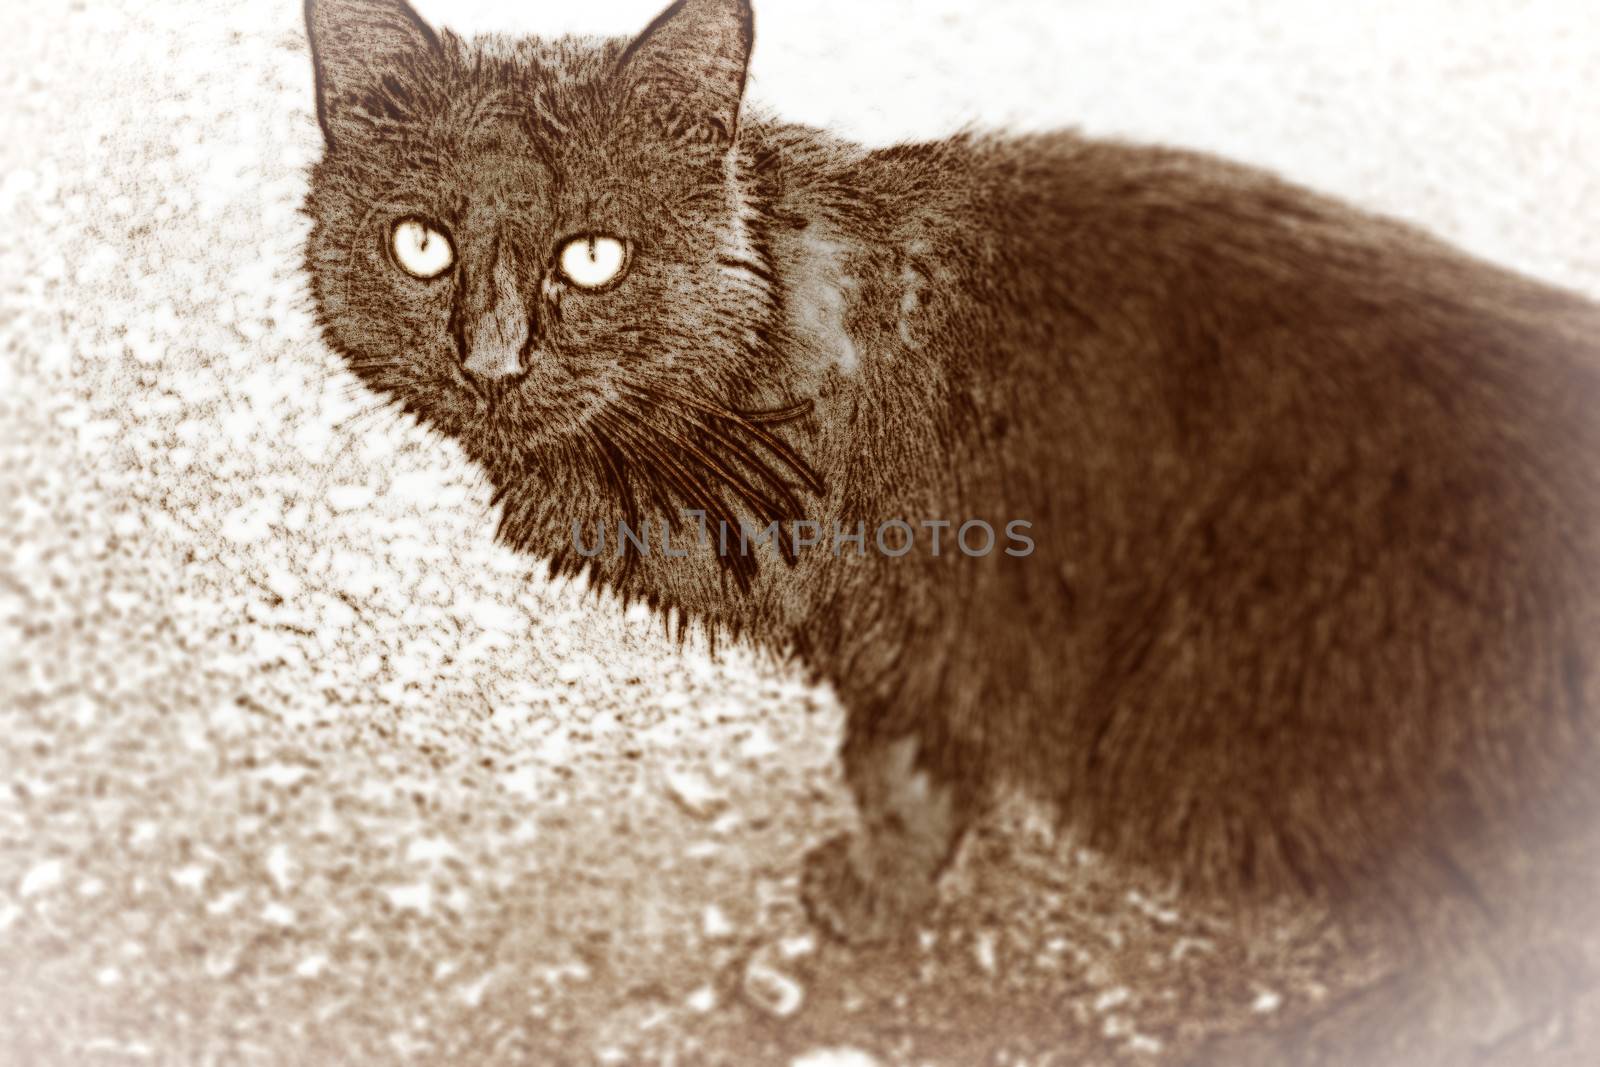 Cat illustration with blurred frame